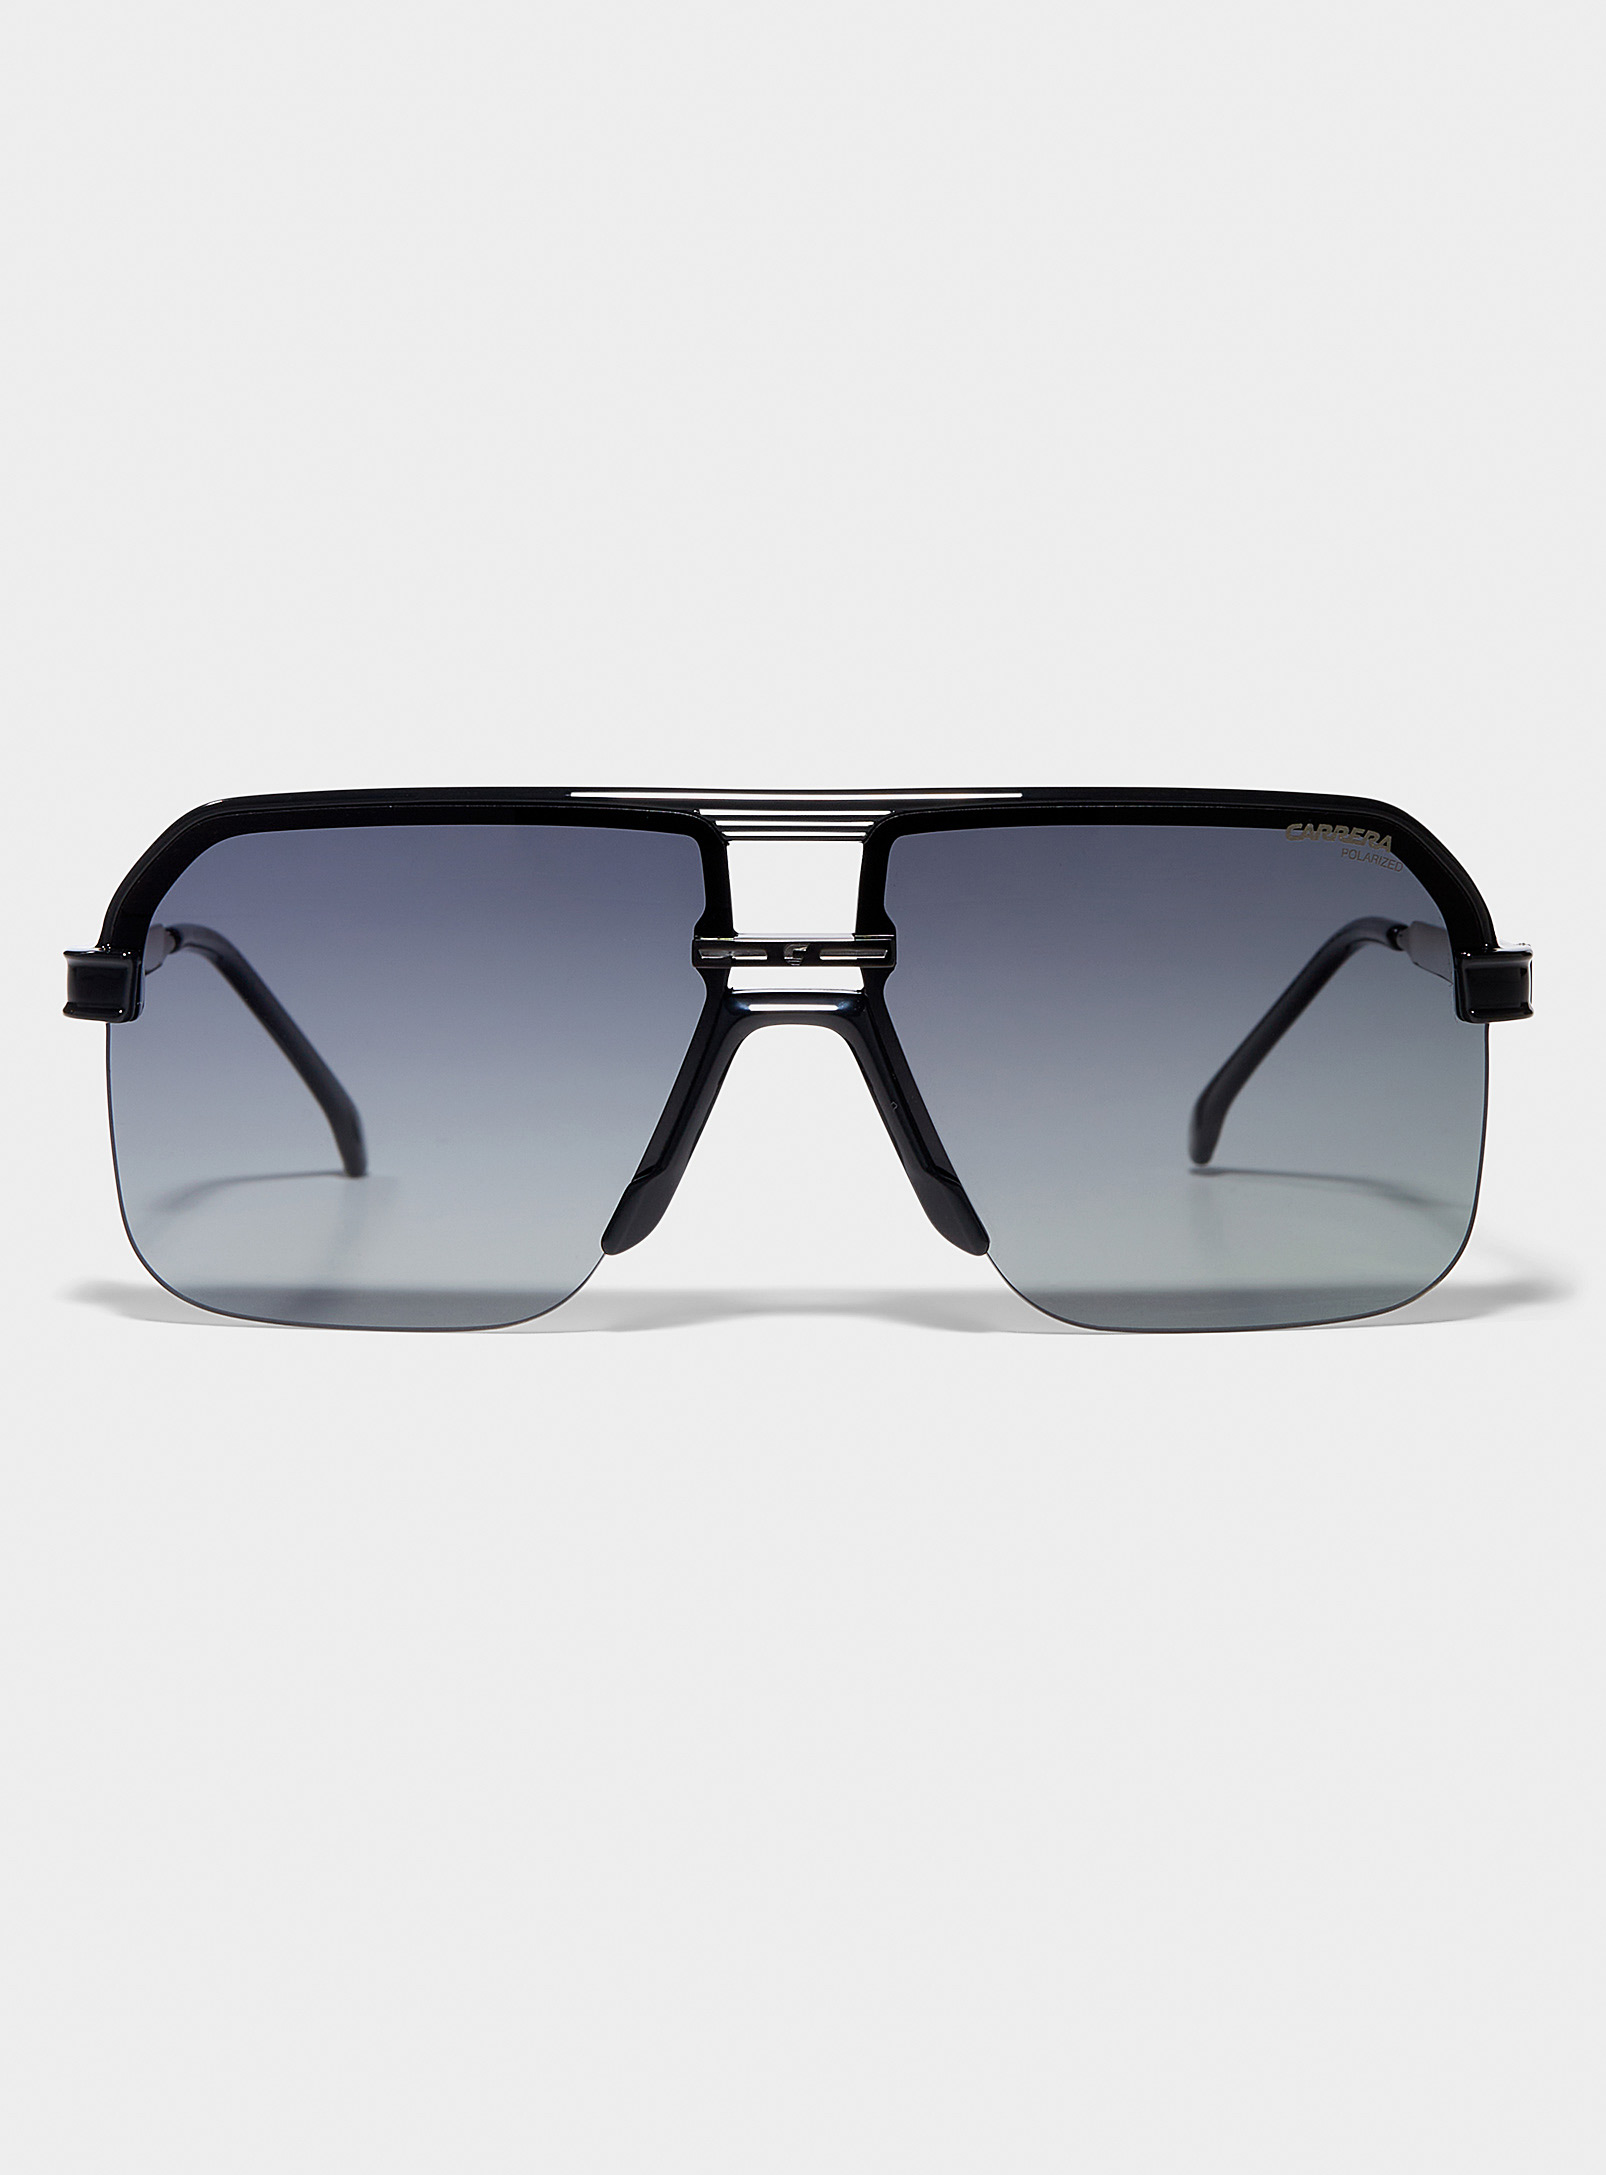 Carrera - Men's Square lens aviator sunglasses